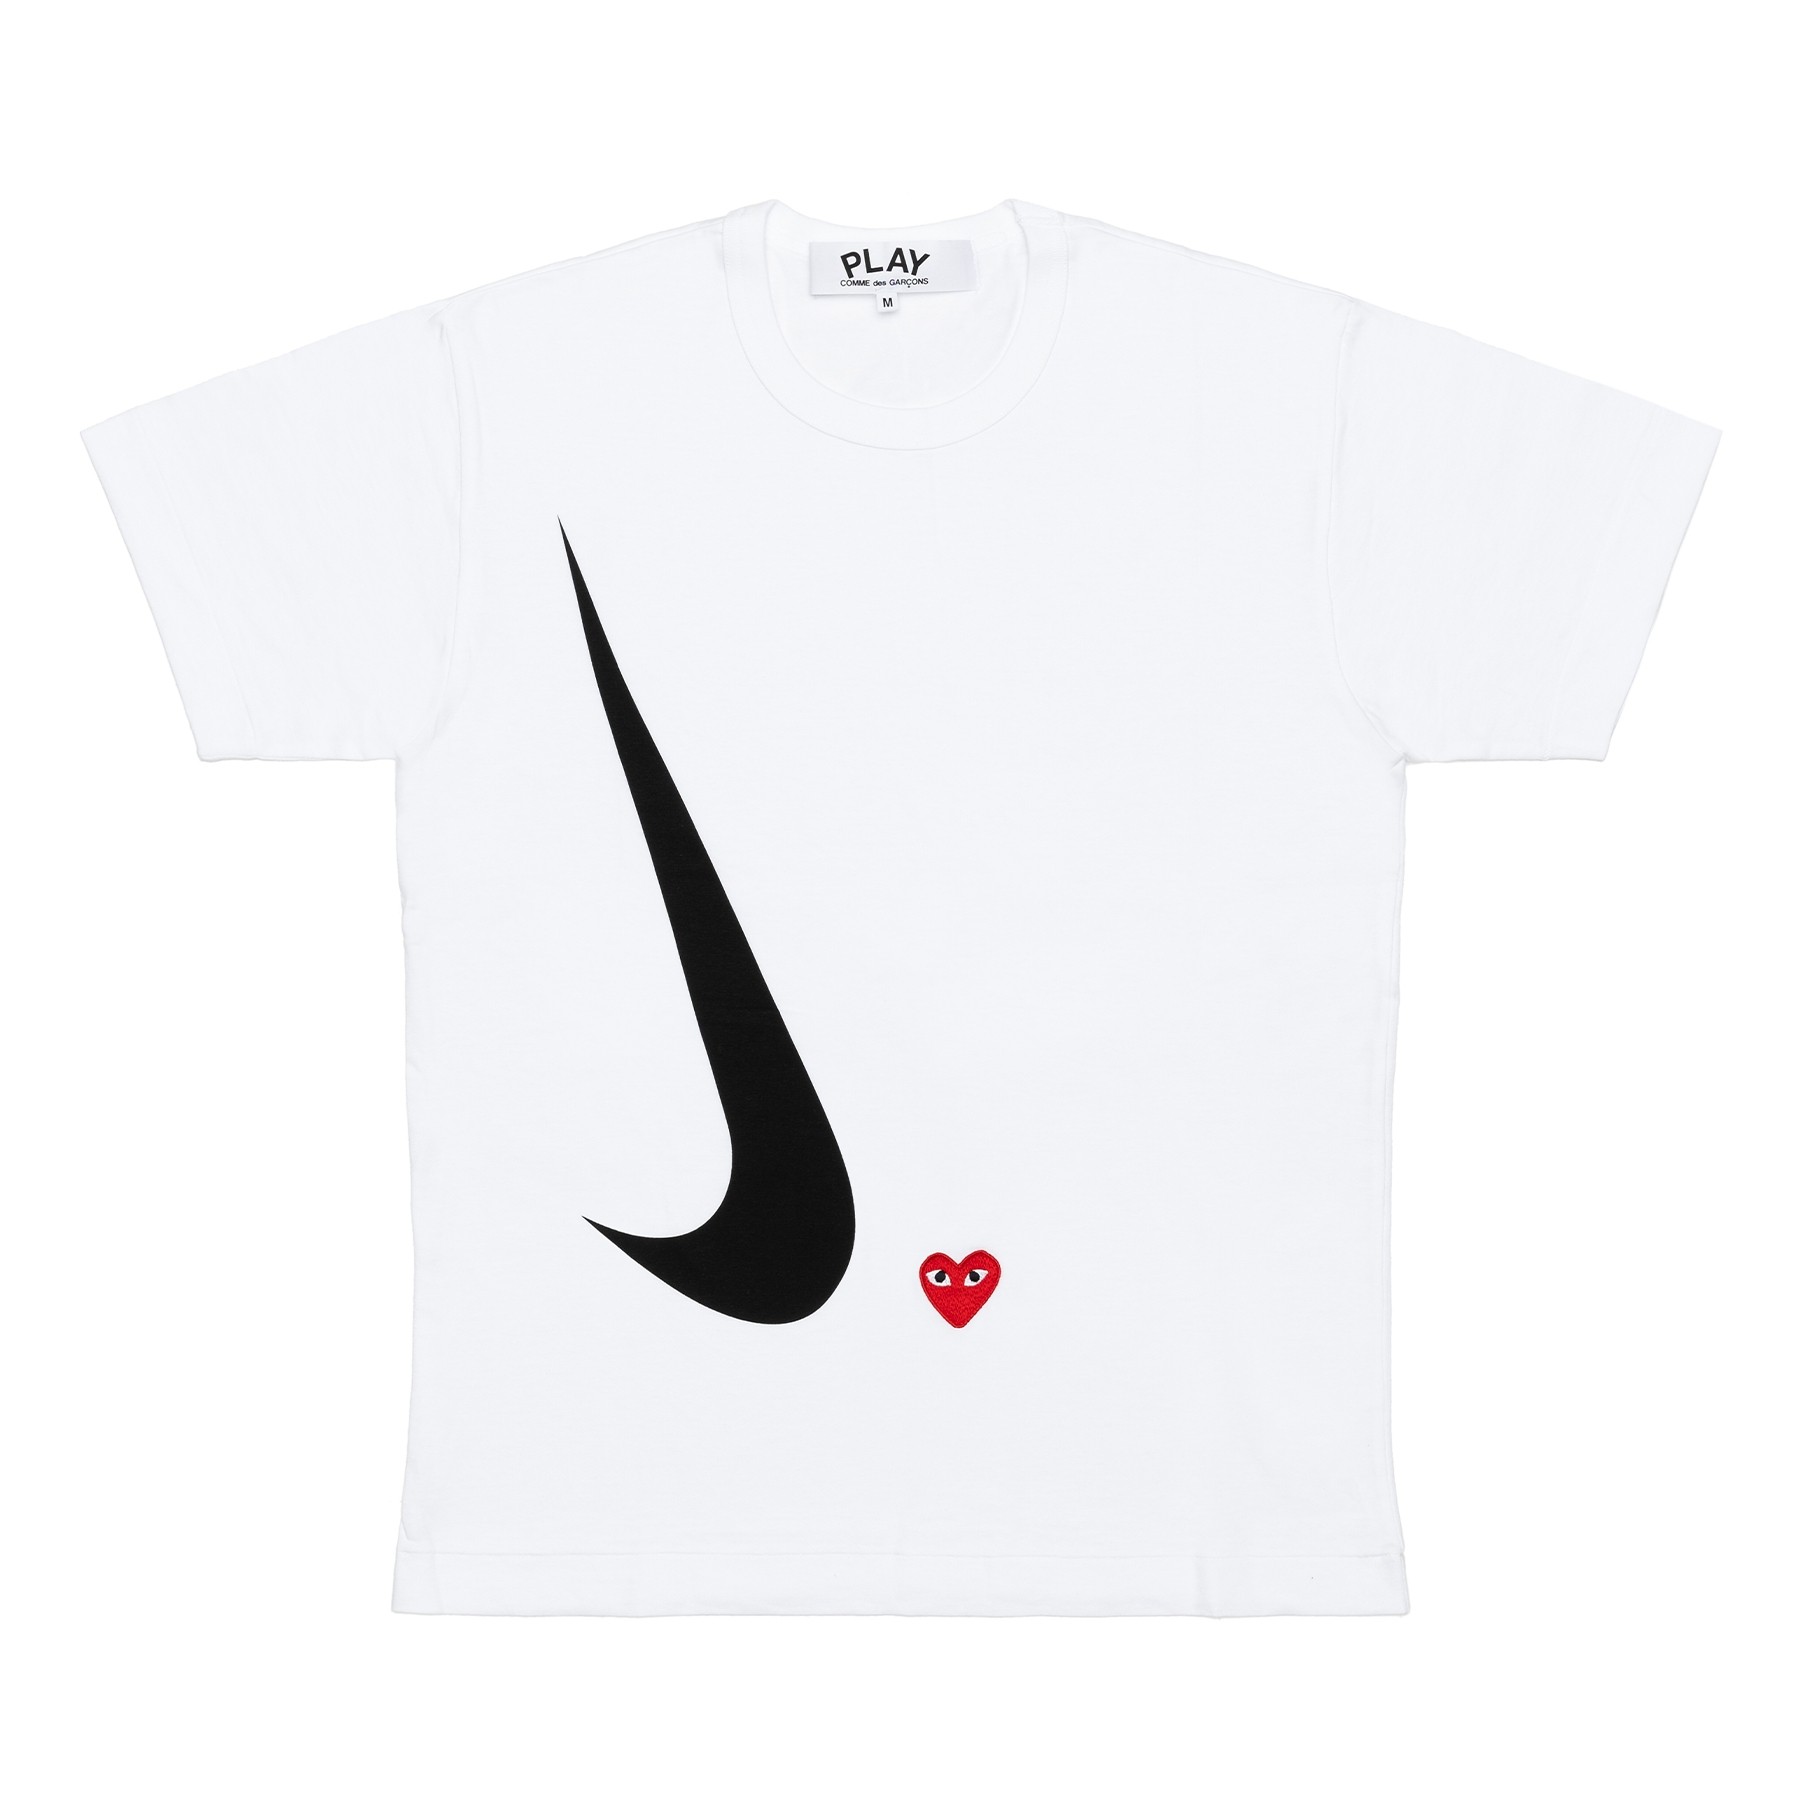 CDG x Nike T-shirt White - SS21 - US